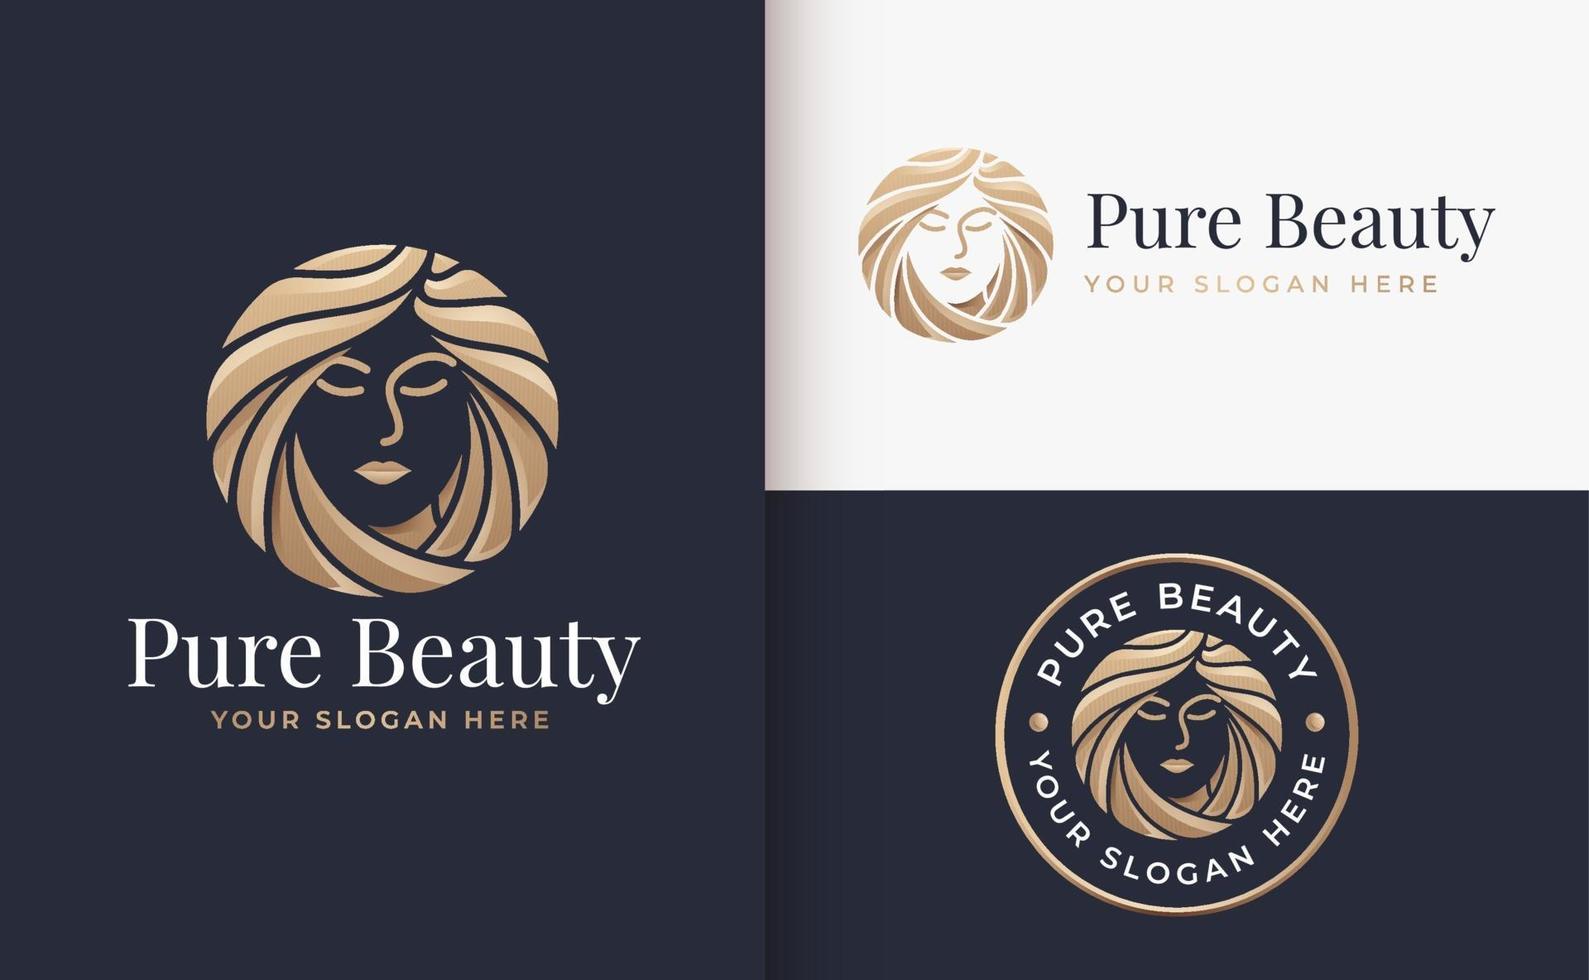 woman hair salon gold gradient logo design vector